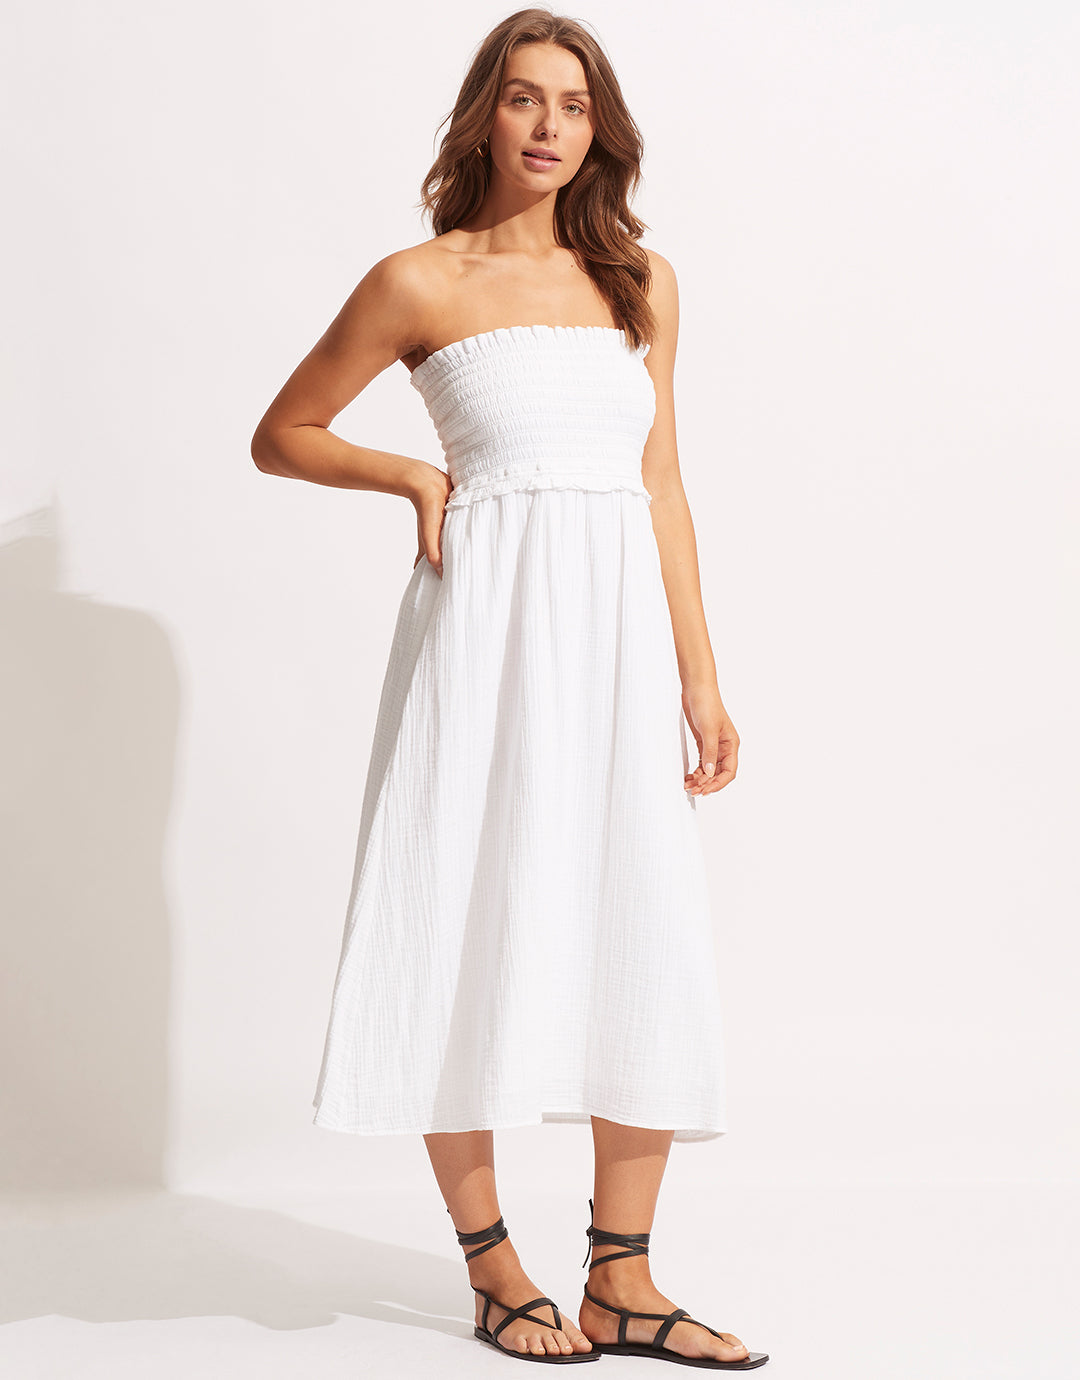 Caspian Strapless Dress/Skirt - White - Simply Beach UK